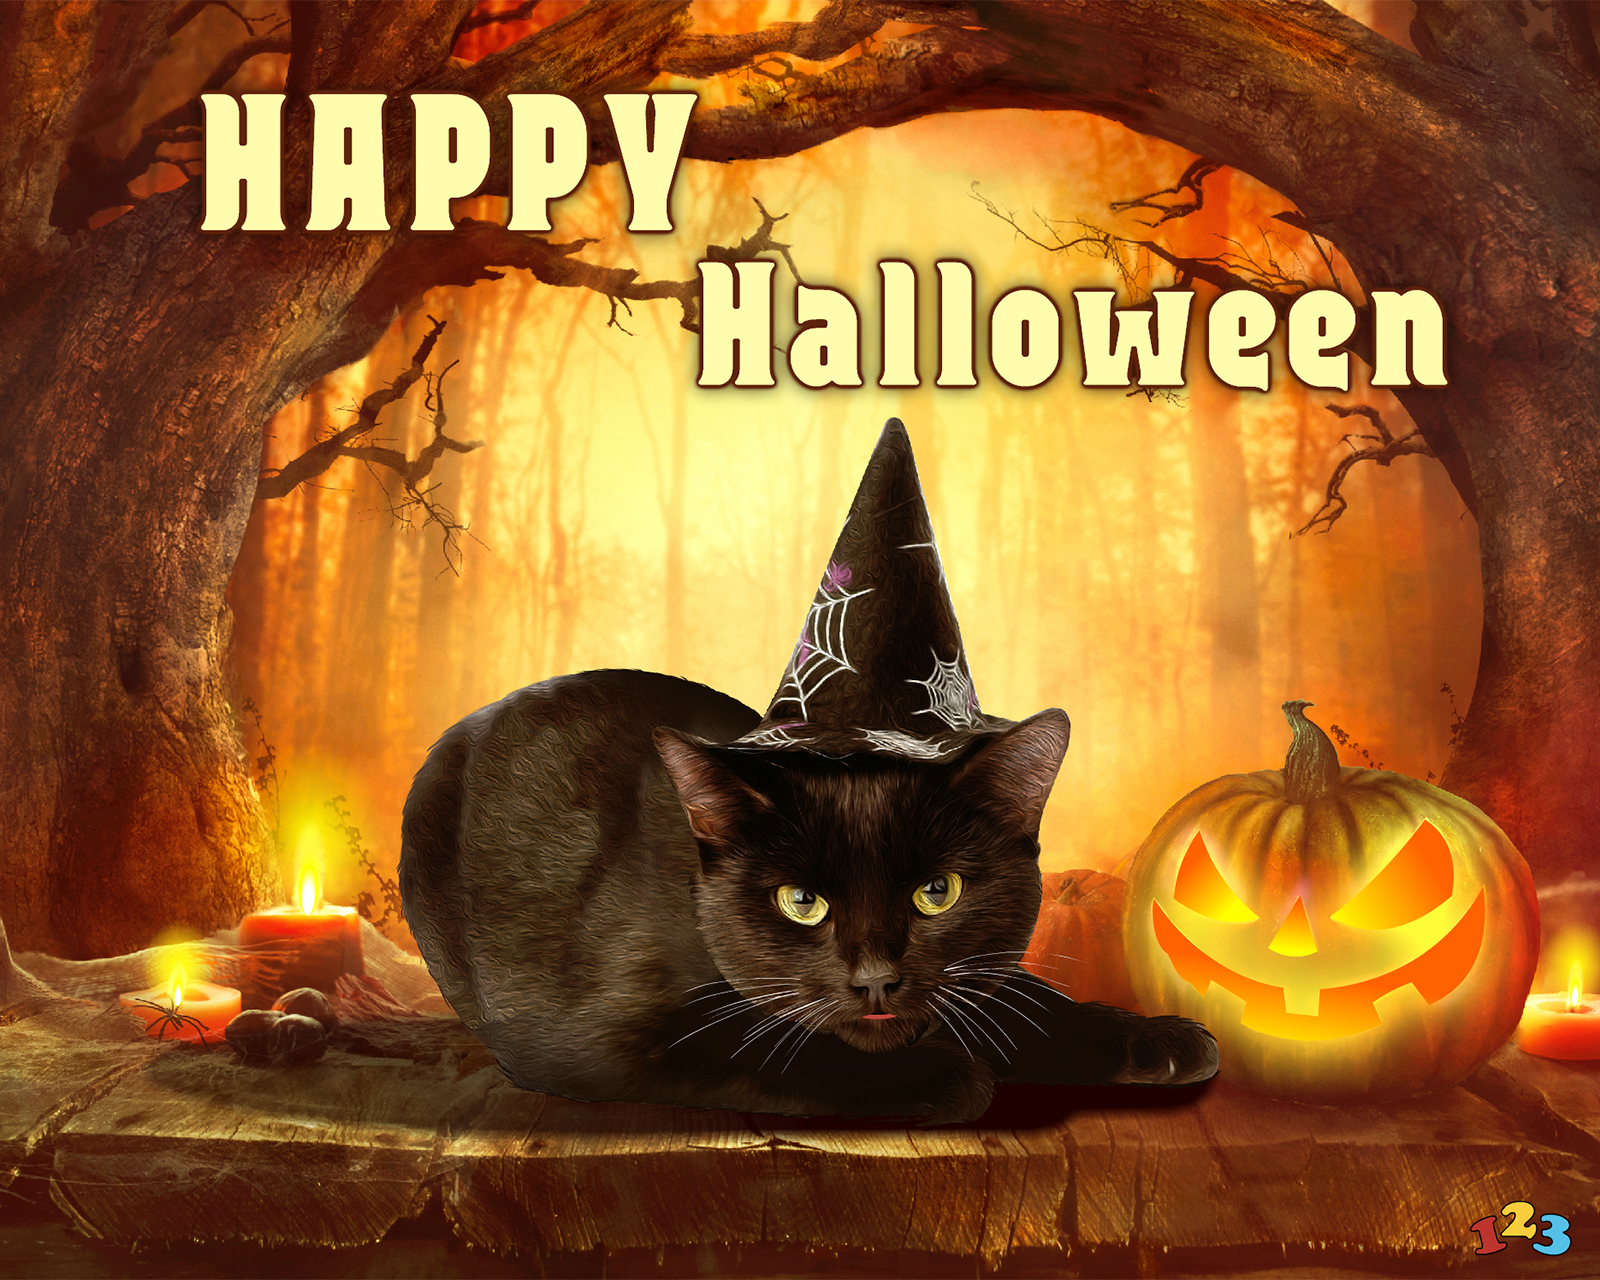 Black cat - Halloween - send free eCards from 123cards.com